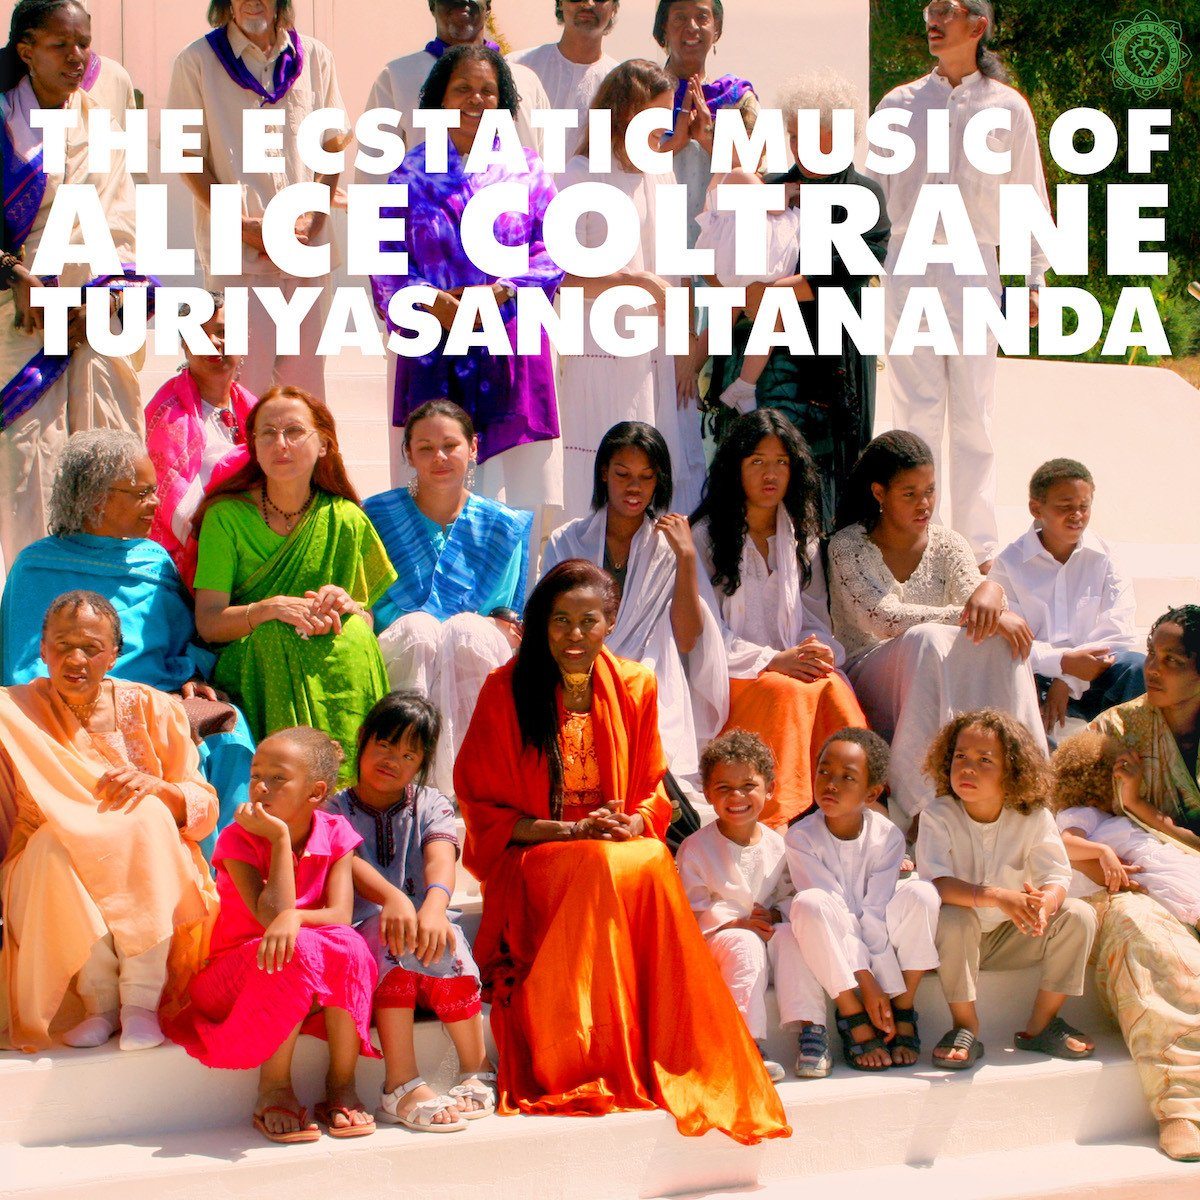 Alice Coltrane - World Spirituality Classics 1: The Ecstatic Music of Alice Coltrane's Turiyasangitananda - Drift Records